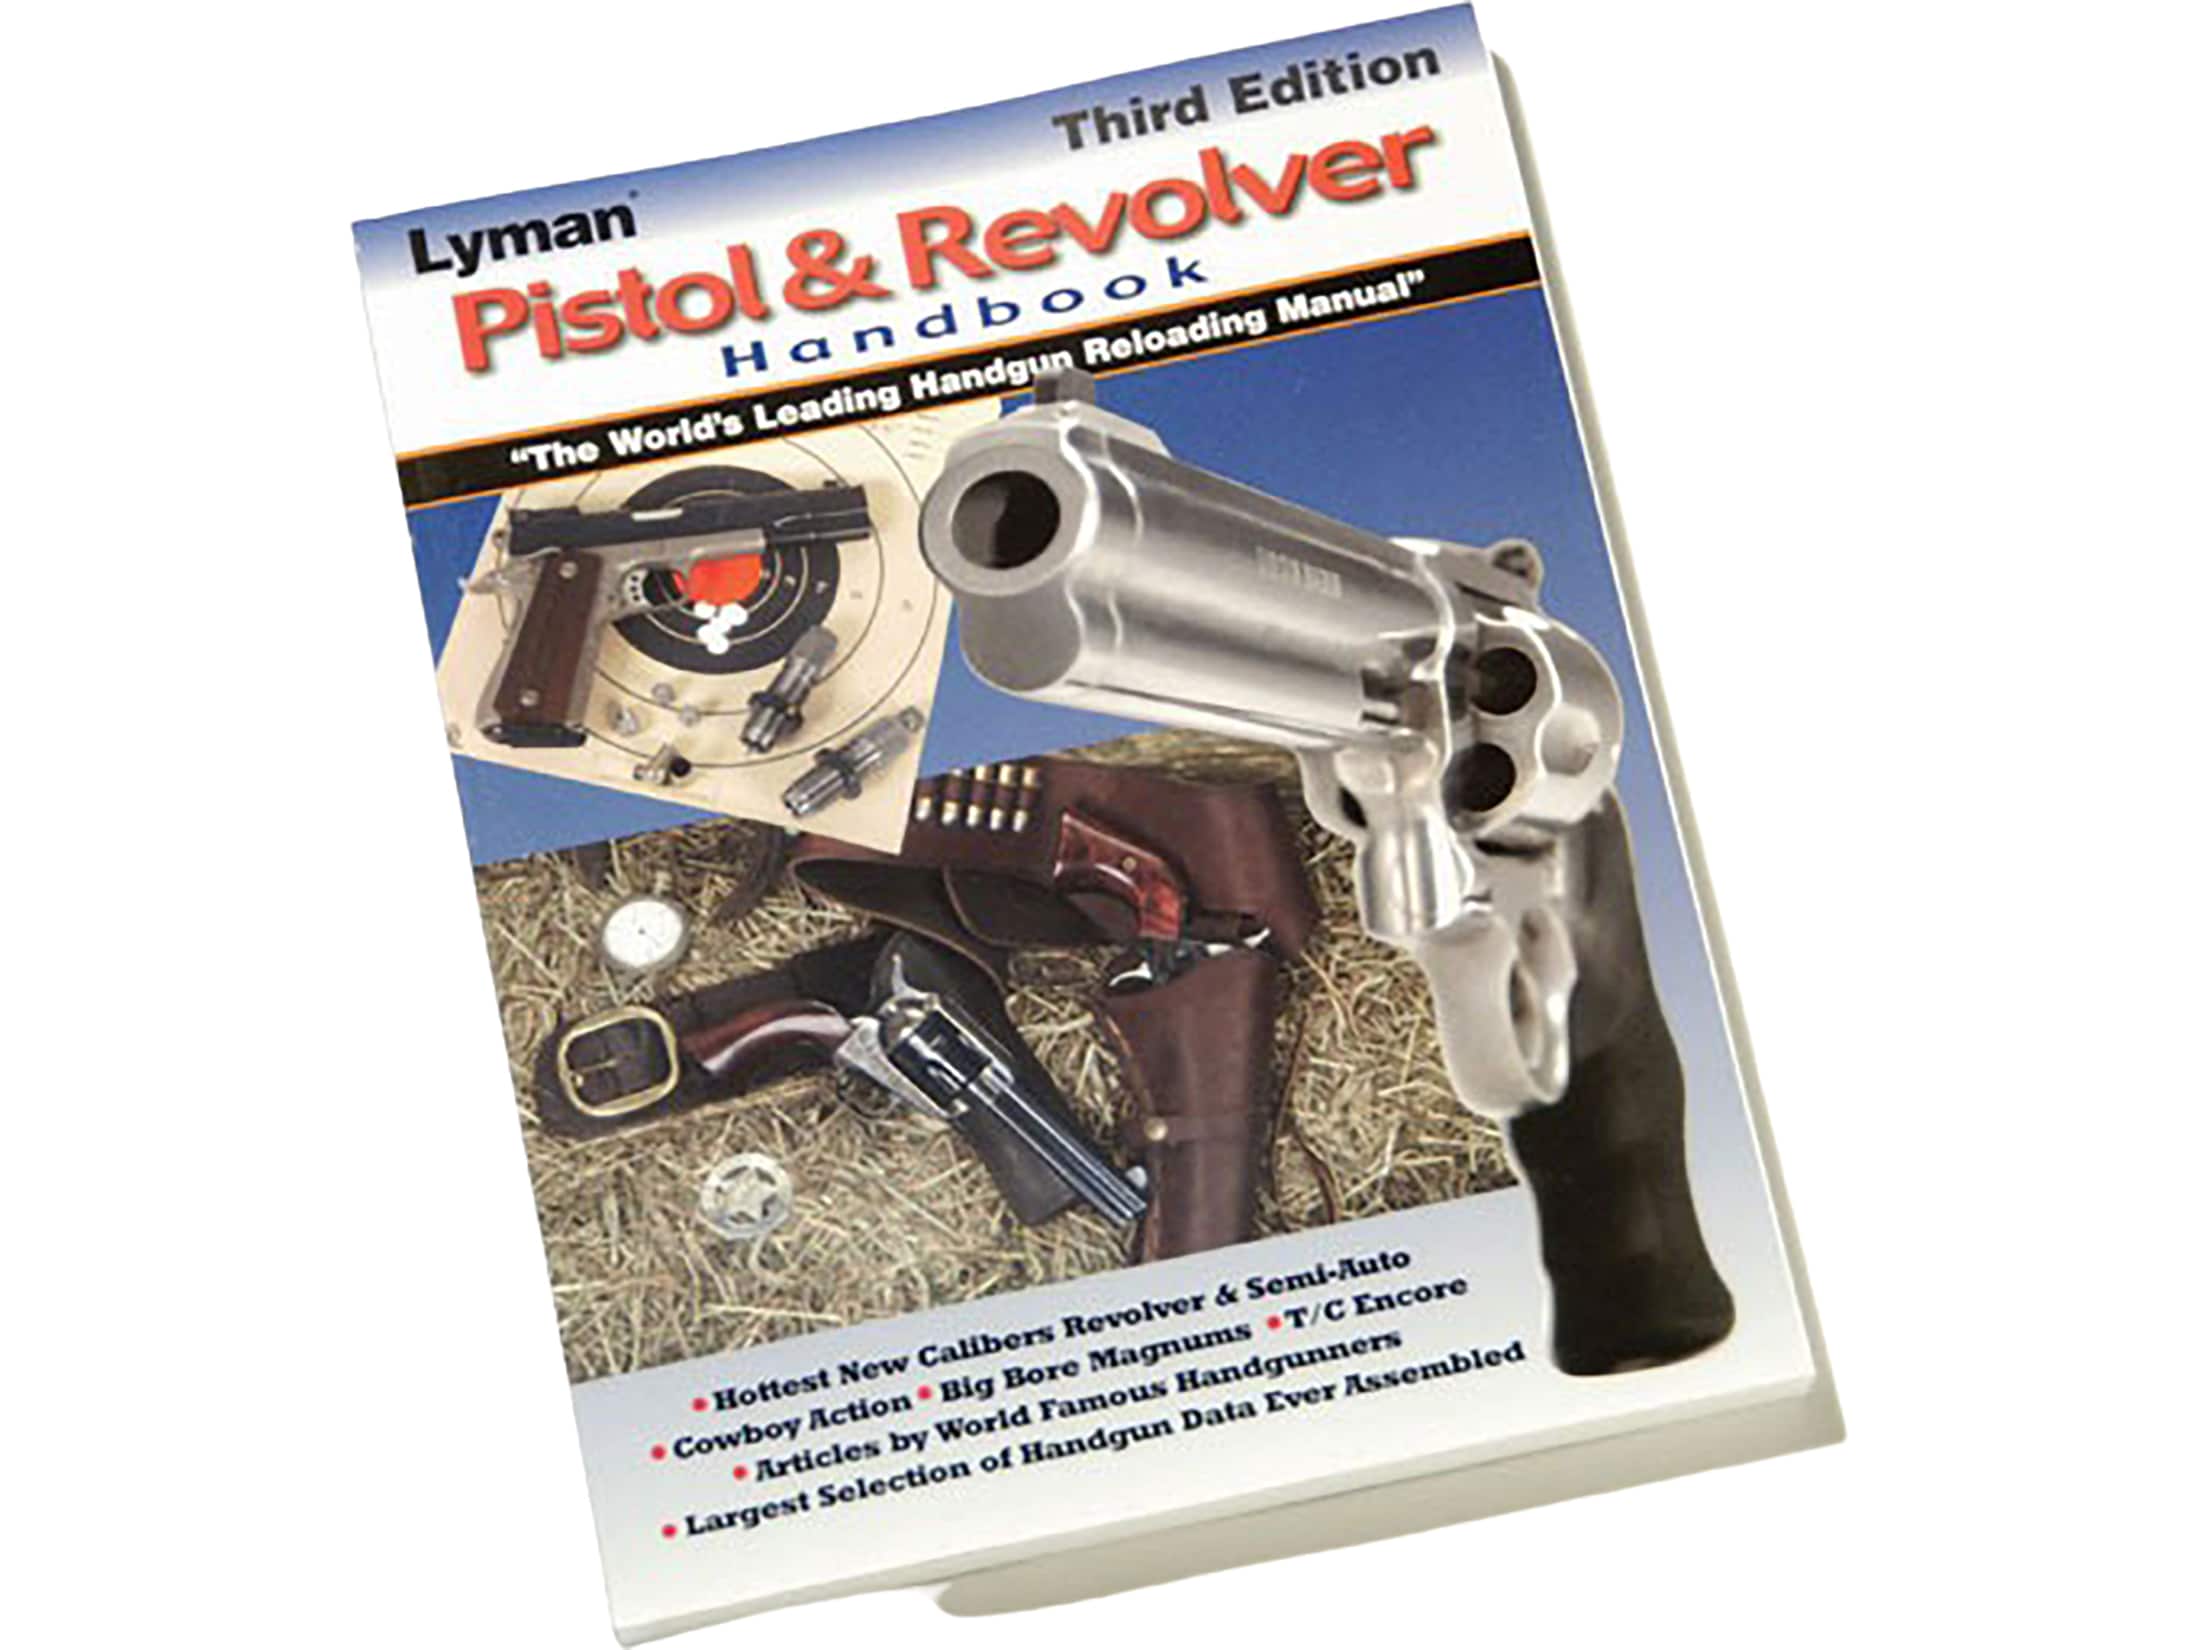 9816060 Lyman Long Range Precision Rifle Reloading Handbook for sale online 